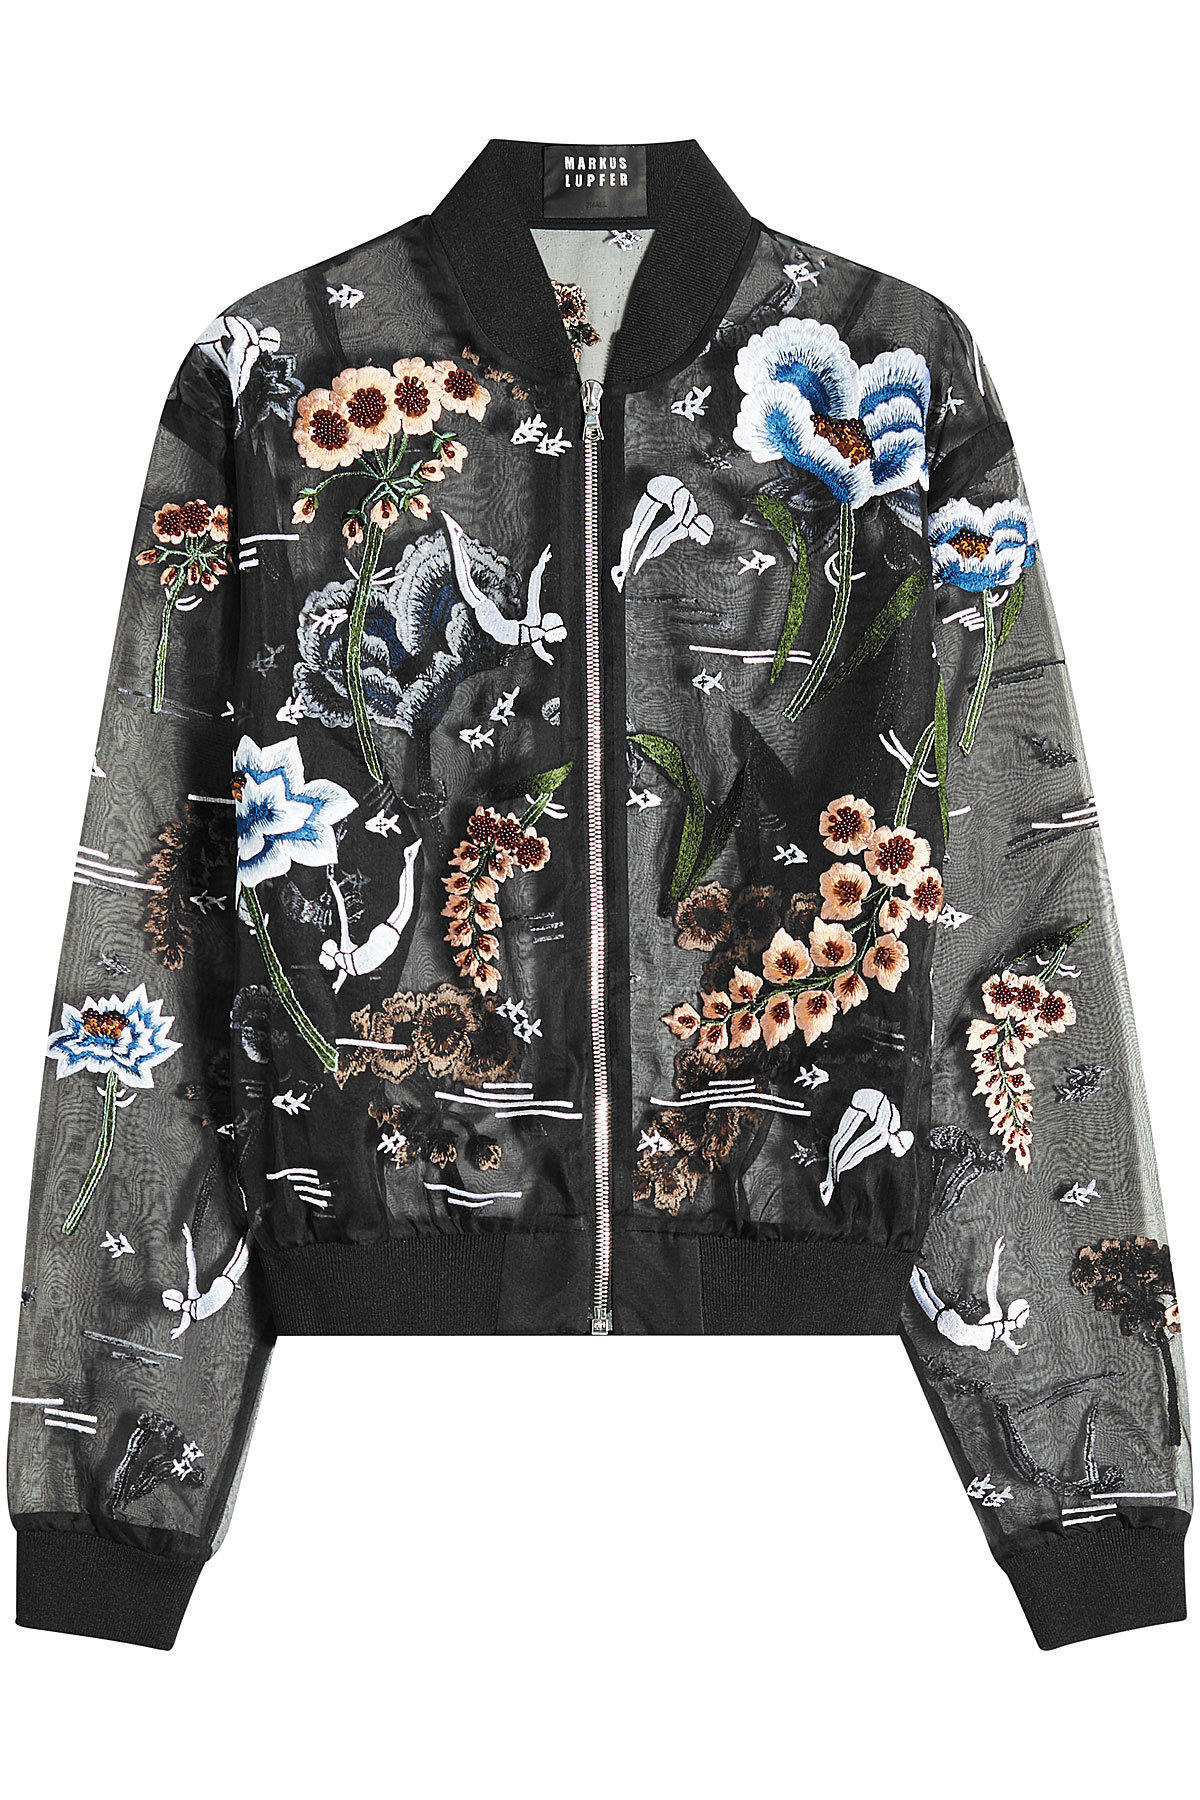 Markus Lupfer - Underwater Embroidered and Embellished Chiffon Jacket